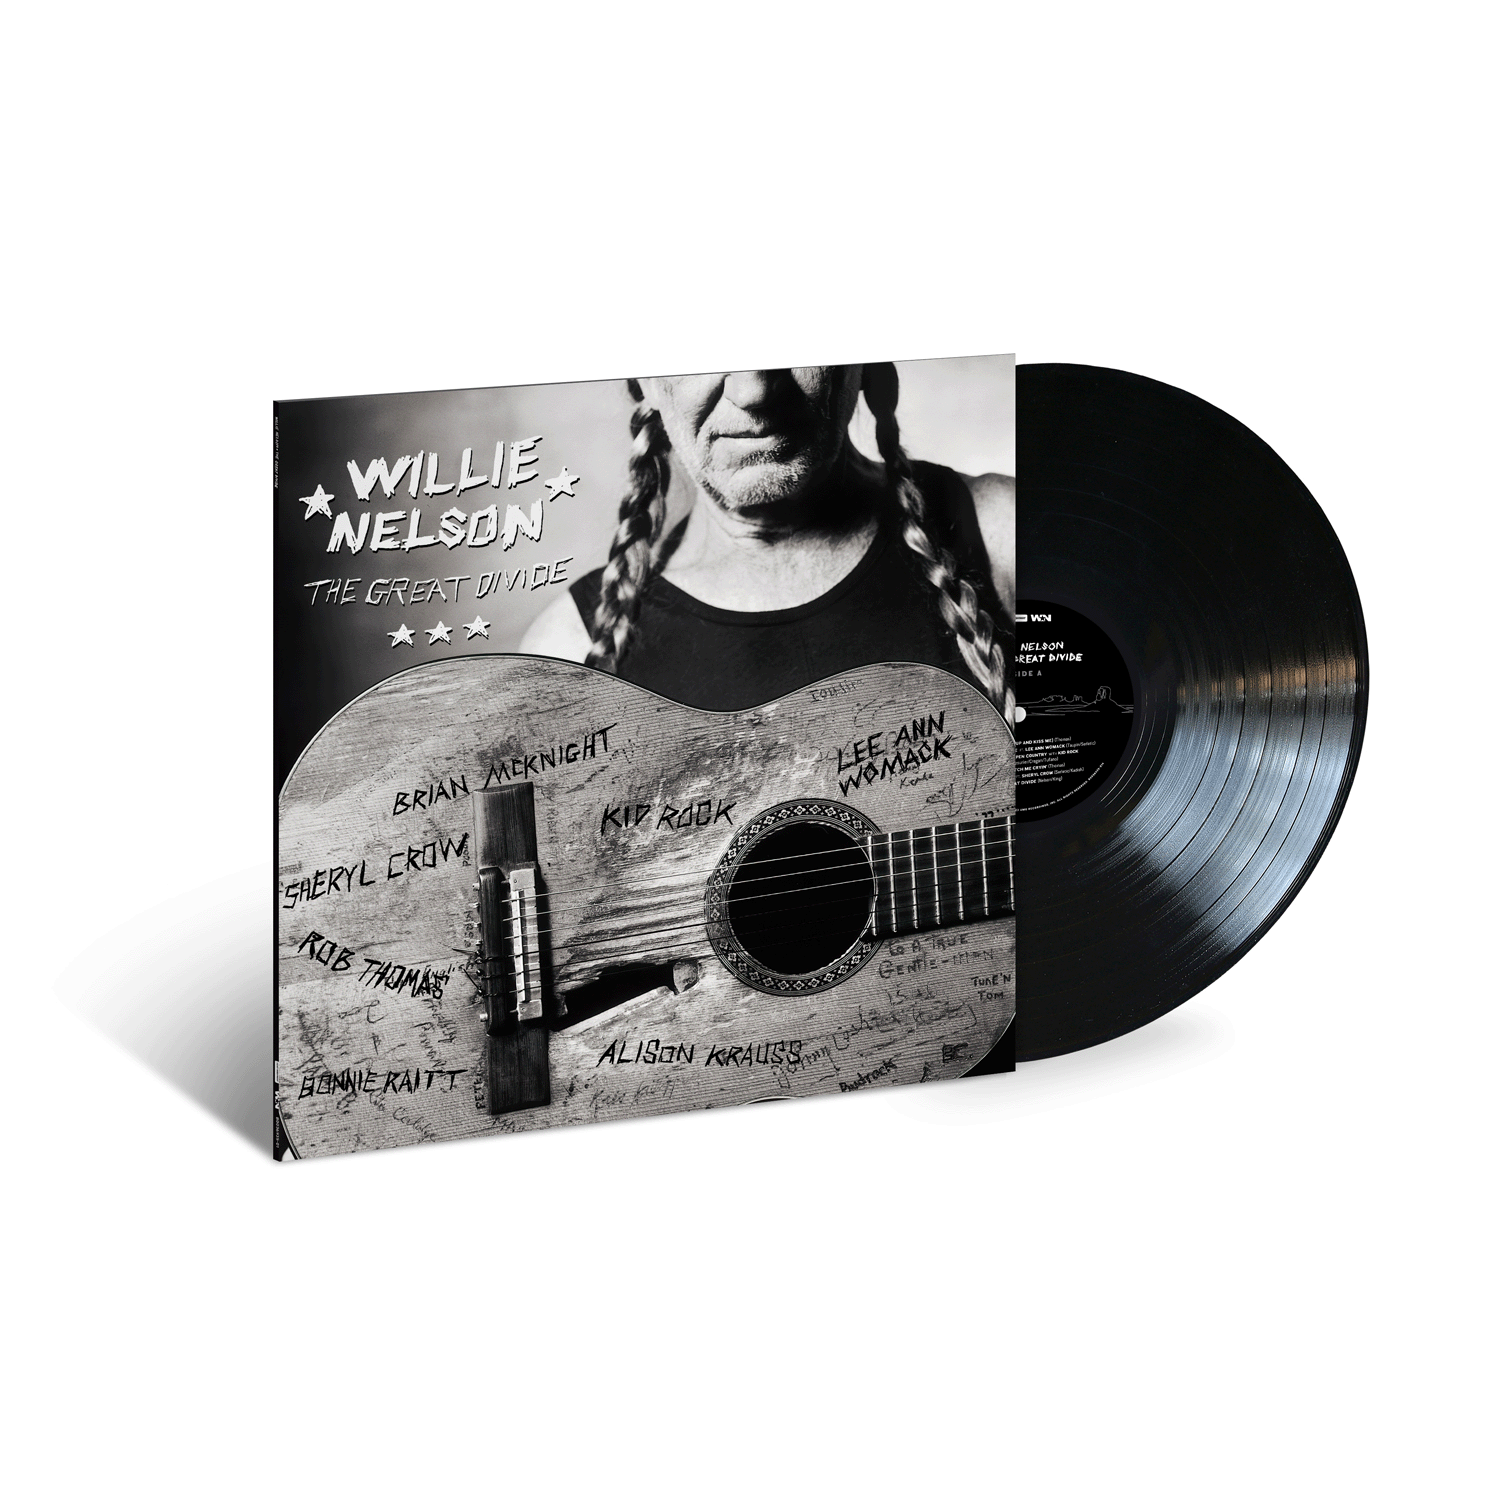 Willie Nelson - The Great Divide: Vinyl LP